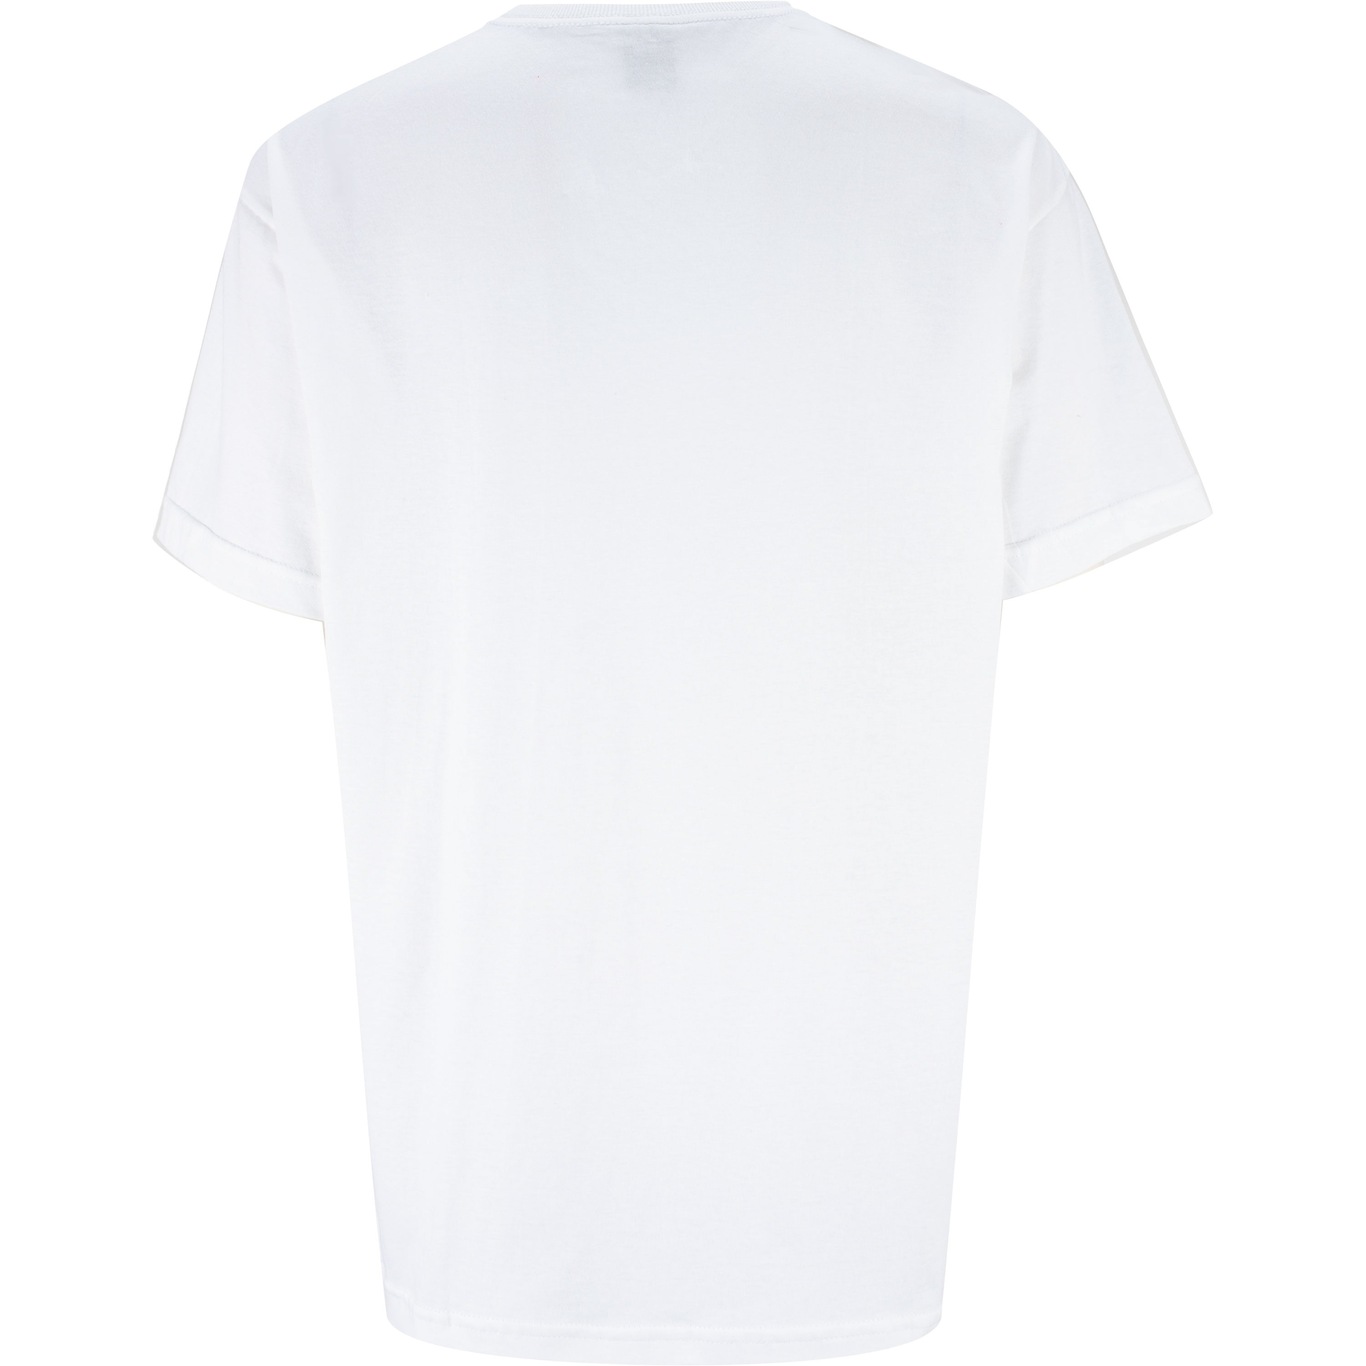 Camiseta Plus Size Fatal Estampada 25987 - Masculina - Foto 5